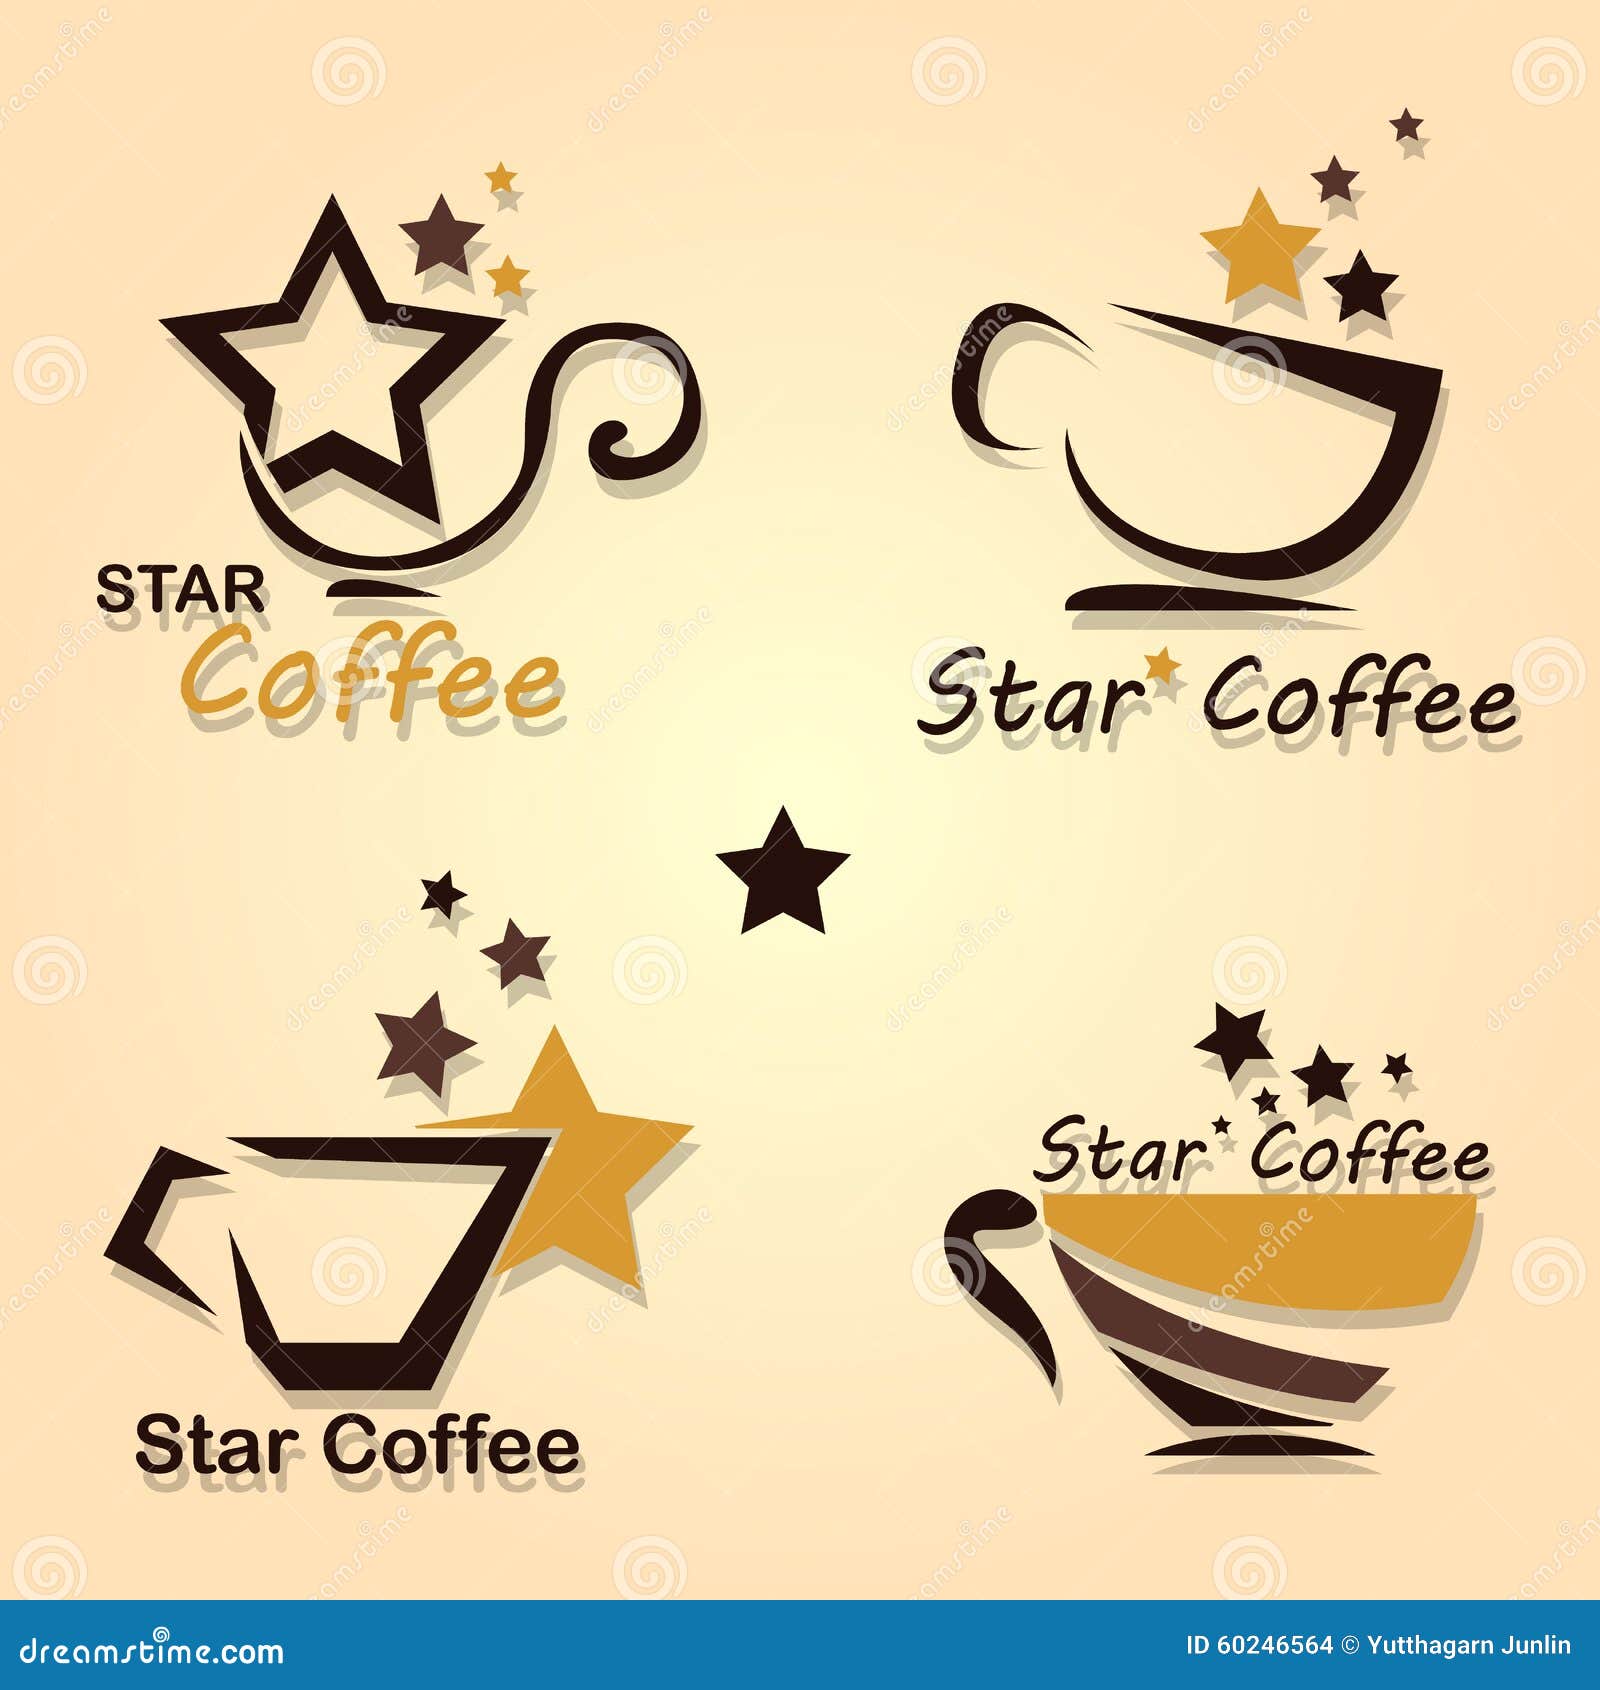 Download Star Coffee stock vector. Illustration of health, heat - 60246564